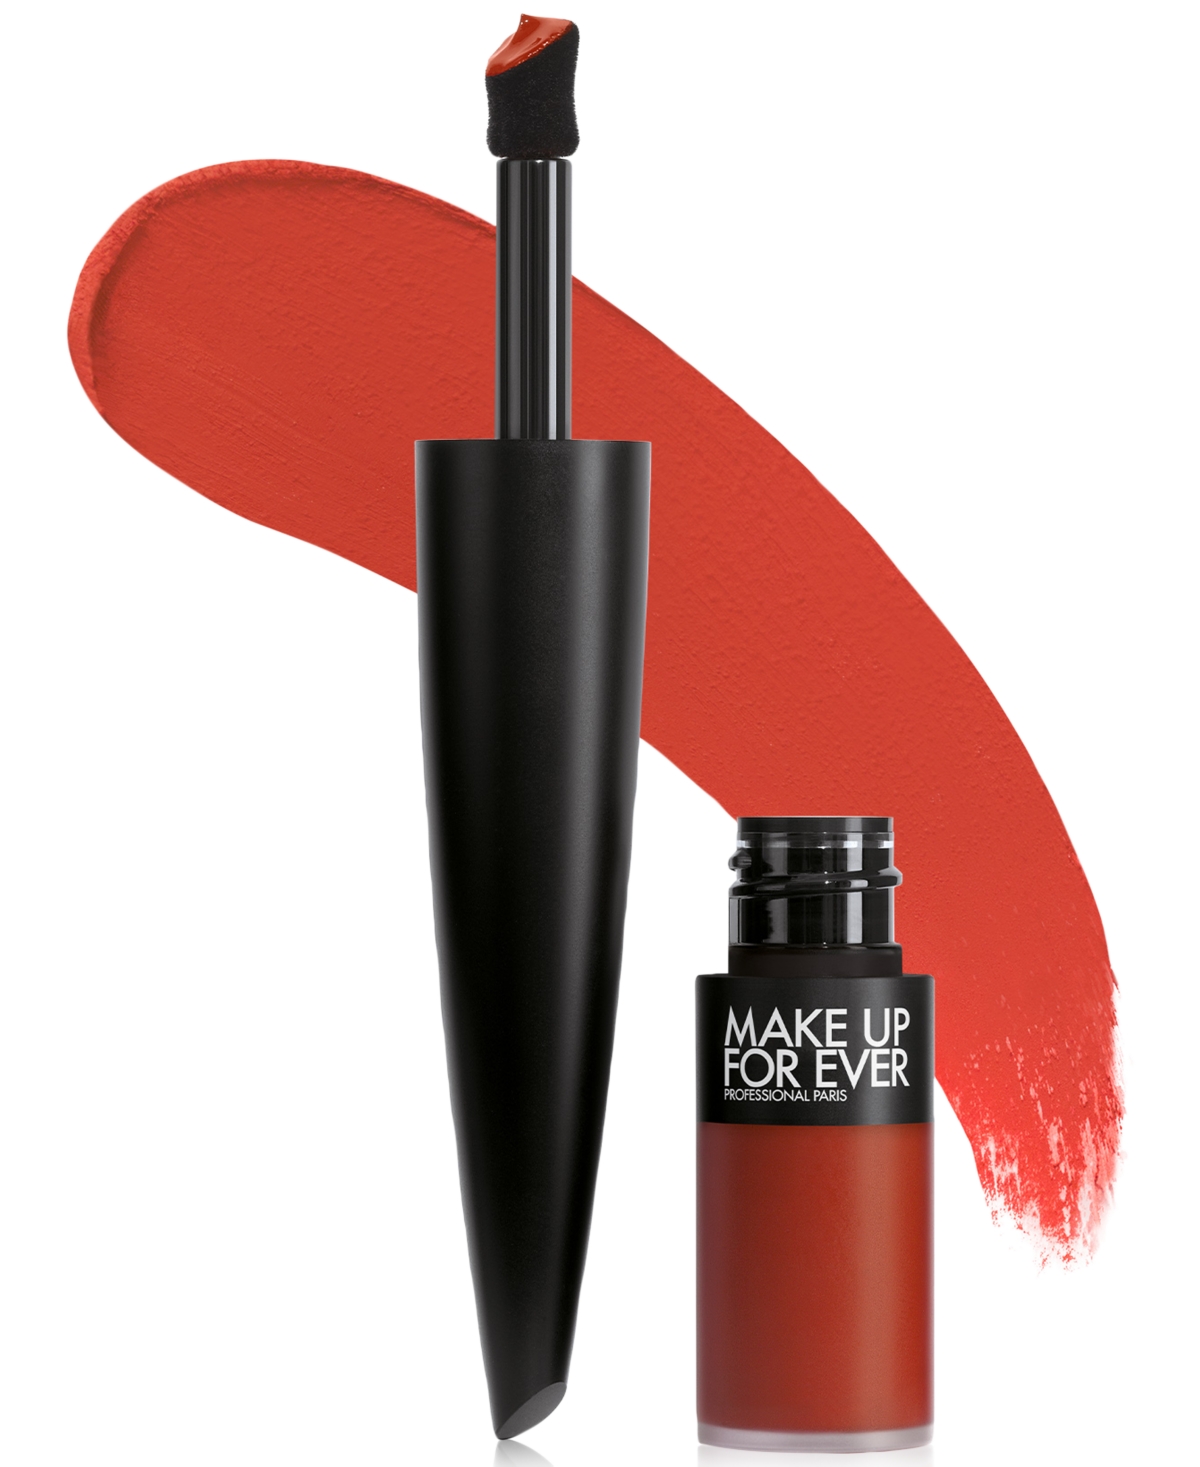 Make Up For Ever Rouge Artist For Ever Matte 24HR Power Last Liquid Lipstick